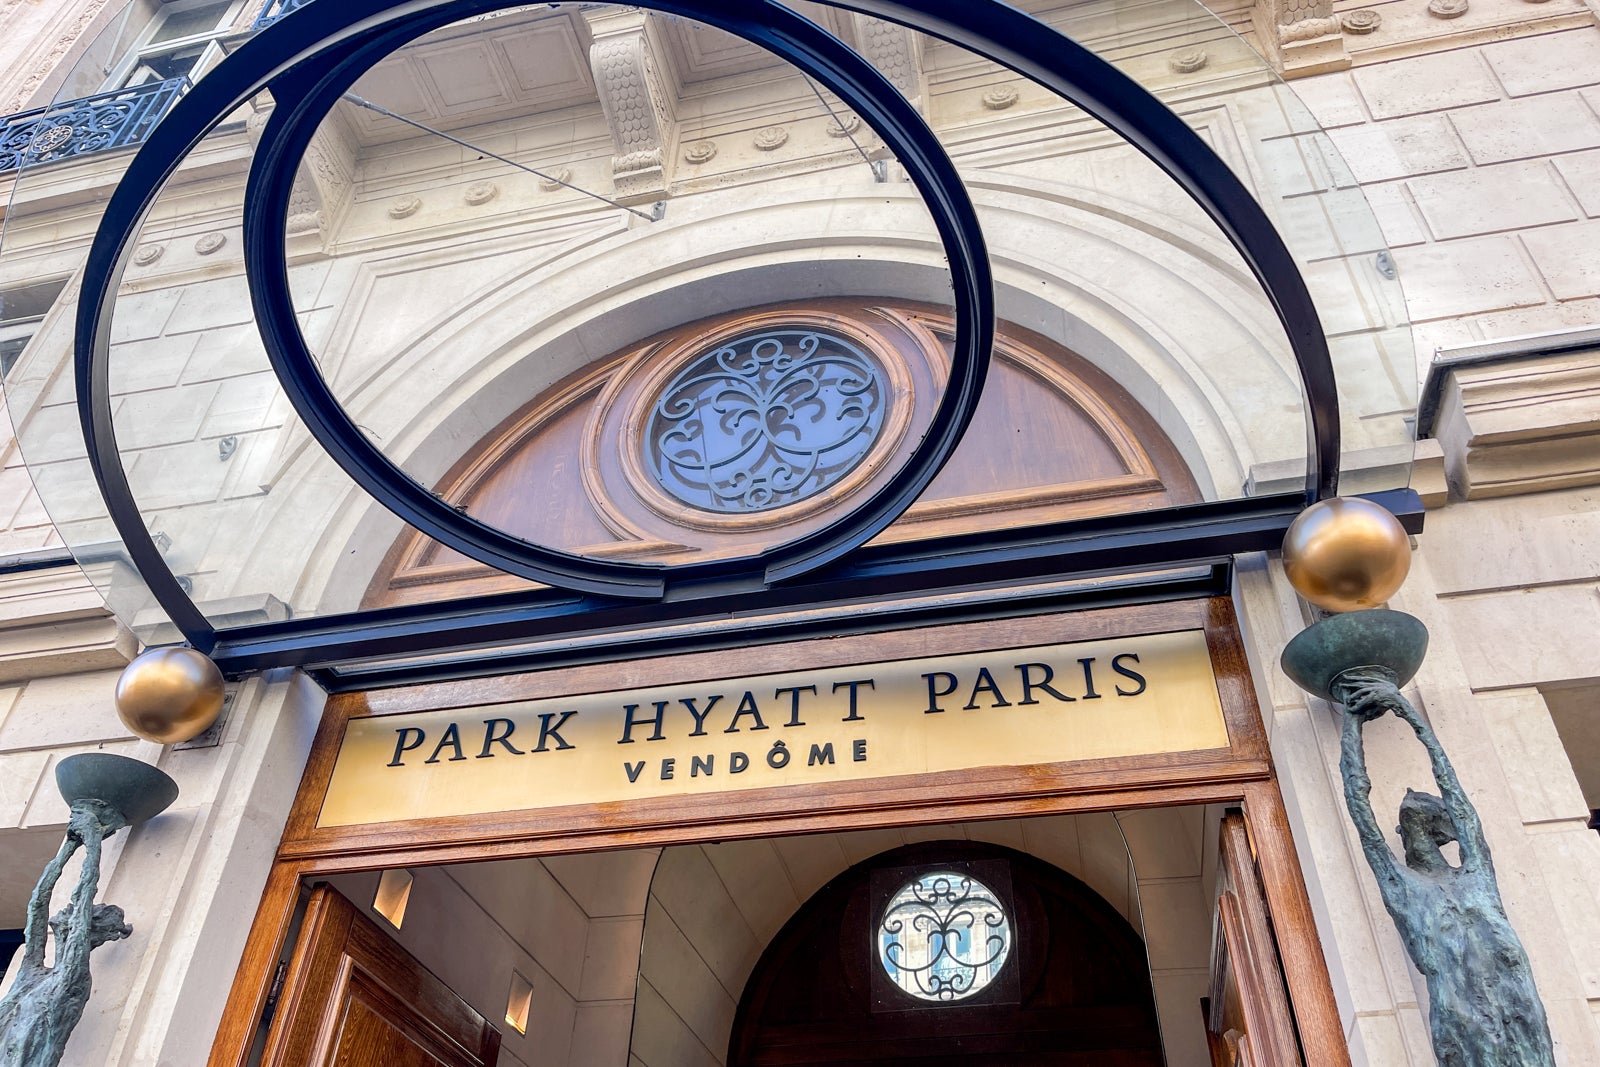 Park Hyatt Vendome Paris